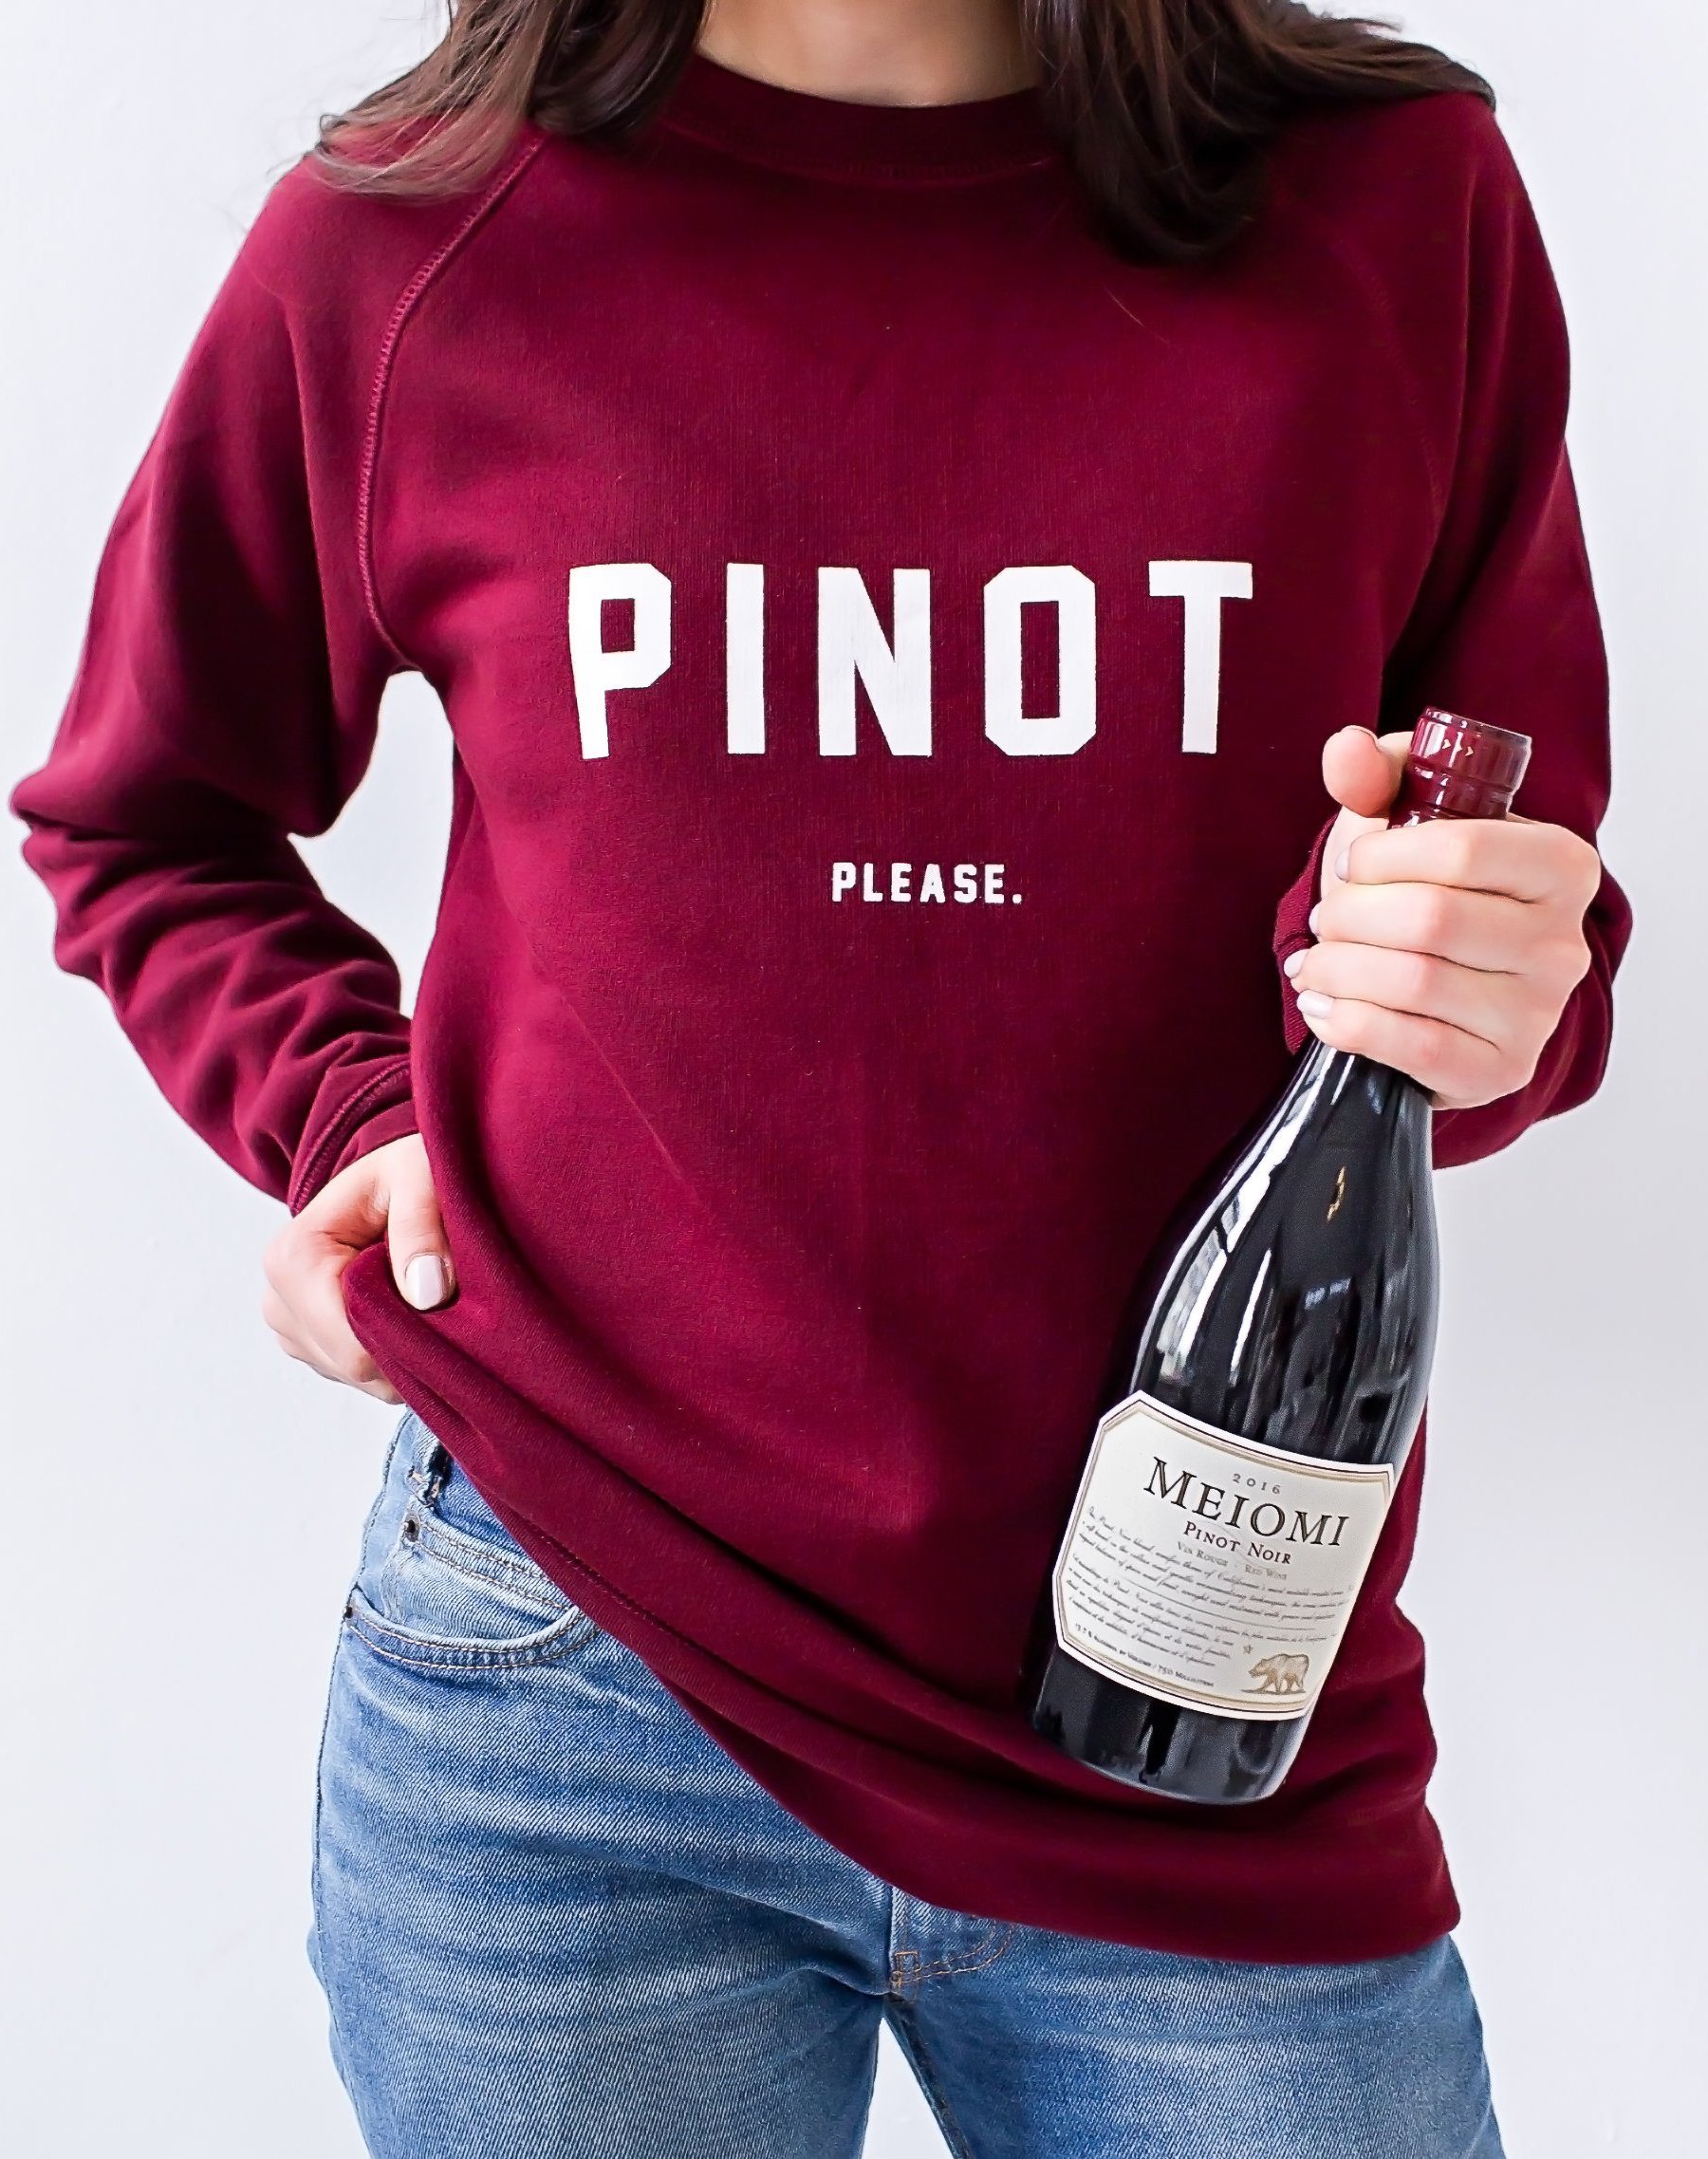 Meiomi Brunette the Label Pinot Please Sweatshirt | National Pinot Noir Day | View the VIBE Toronto